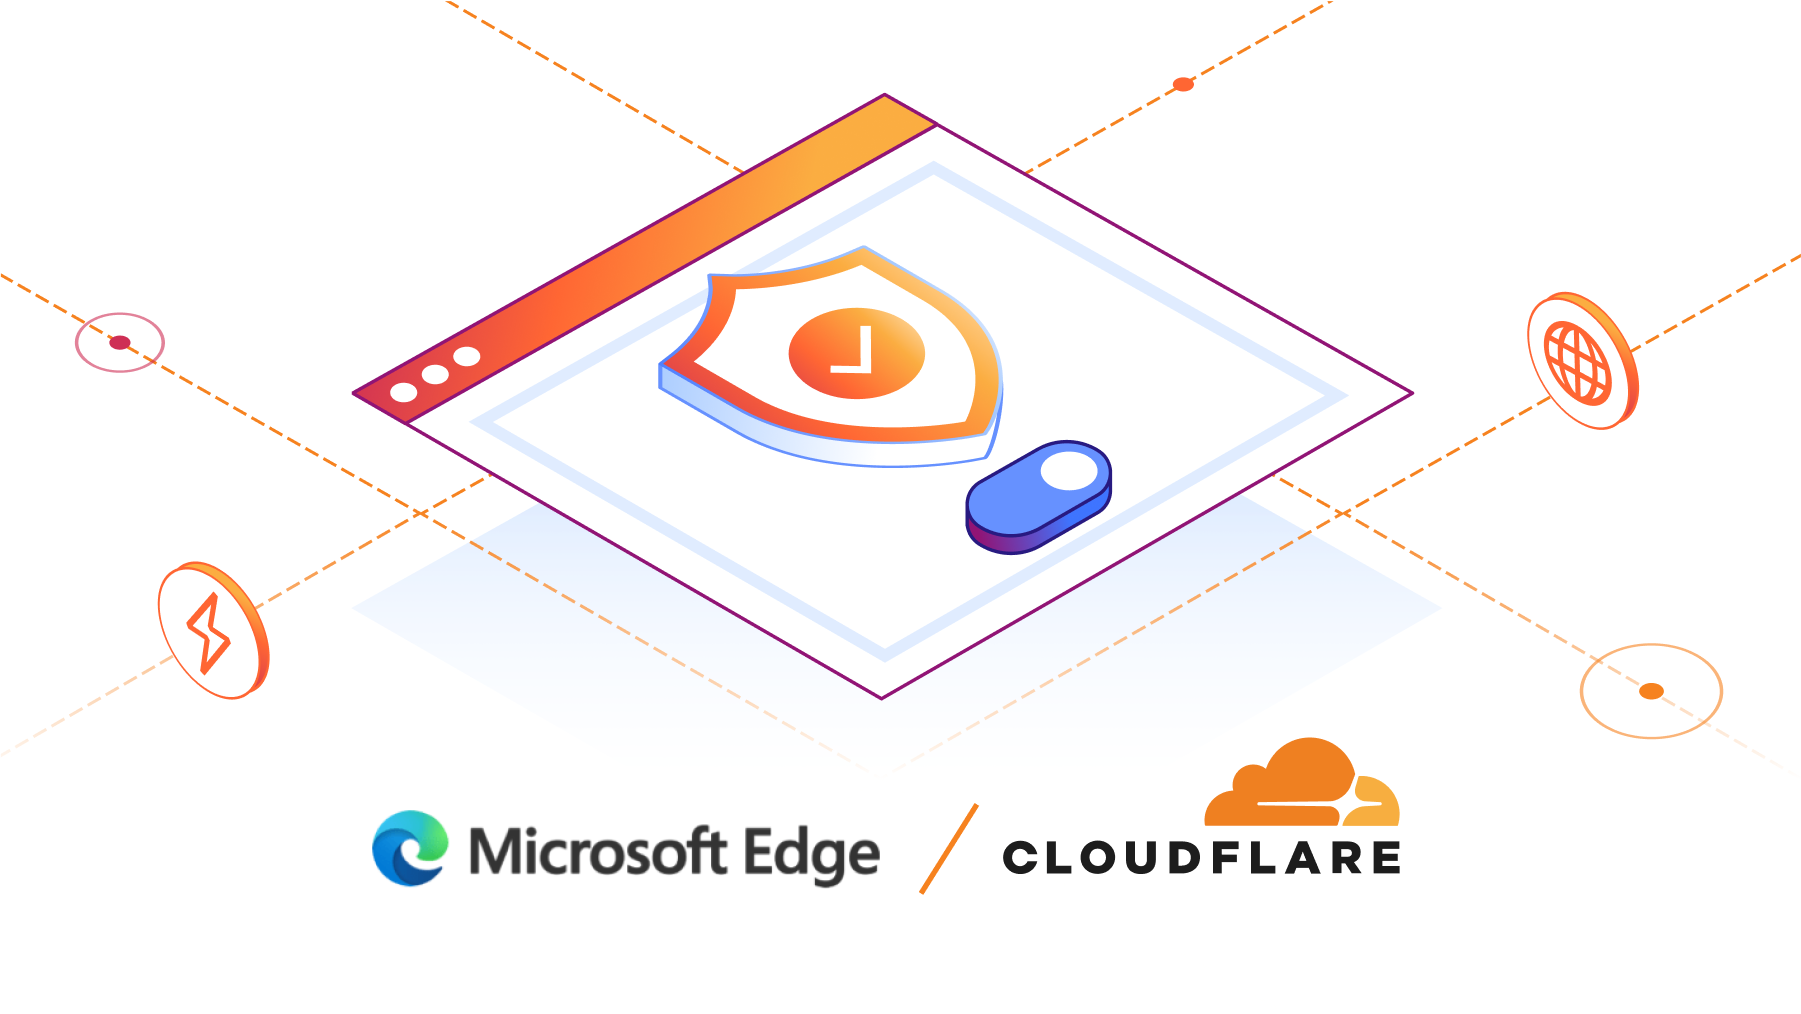 Cloudflare 現在為 Microsoft Edge Secure Network 提供支援
